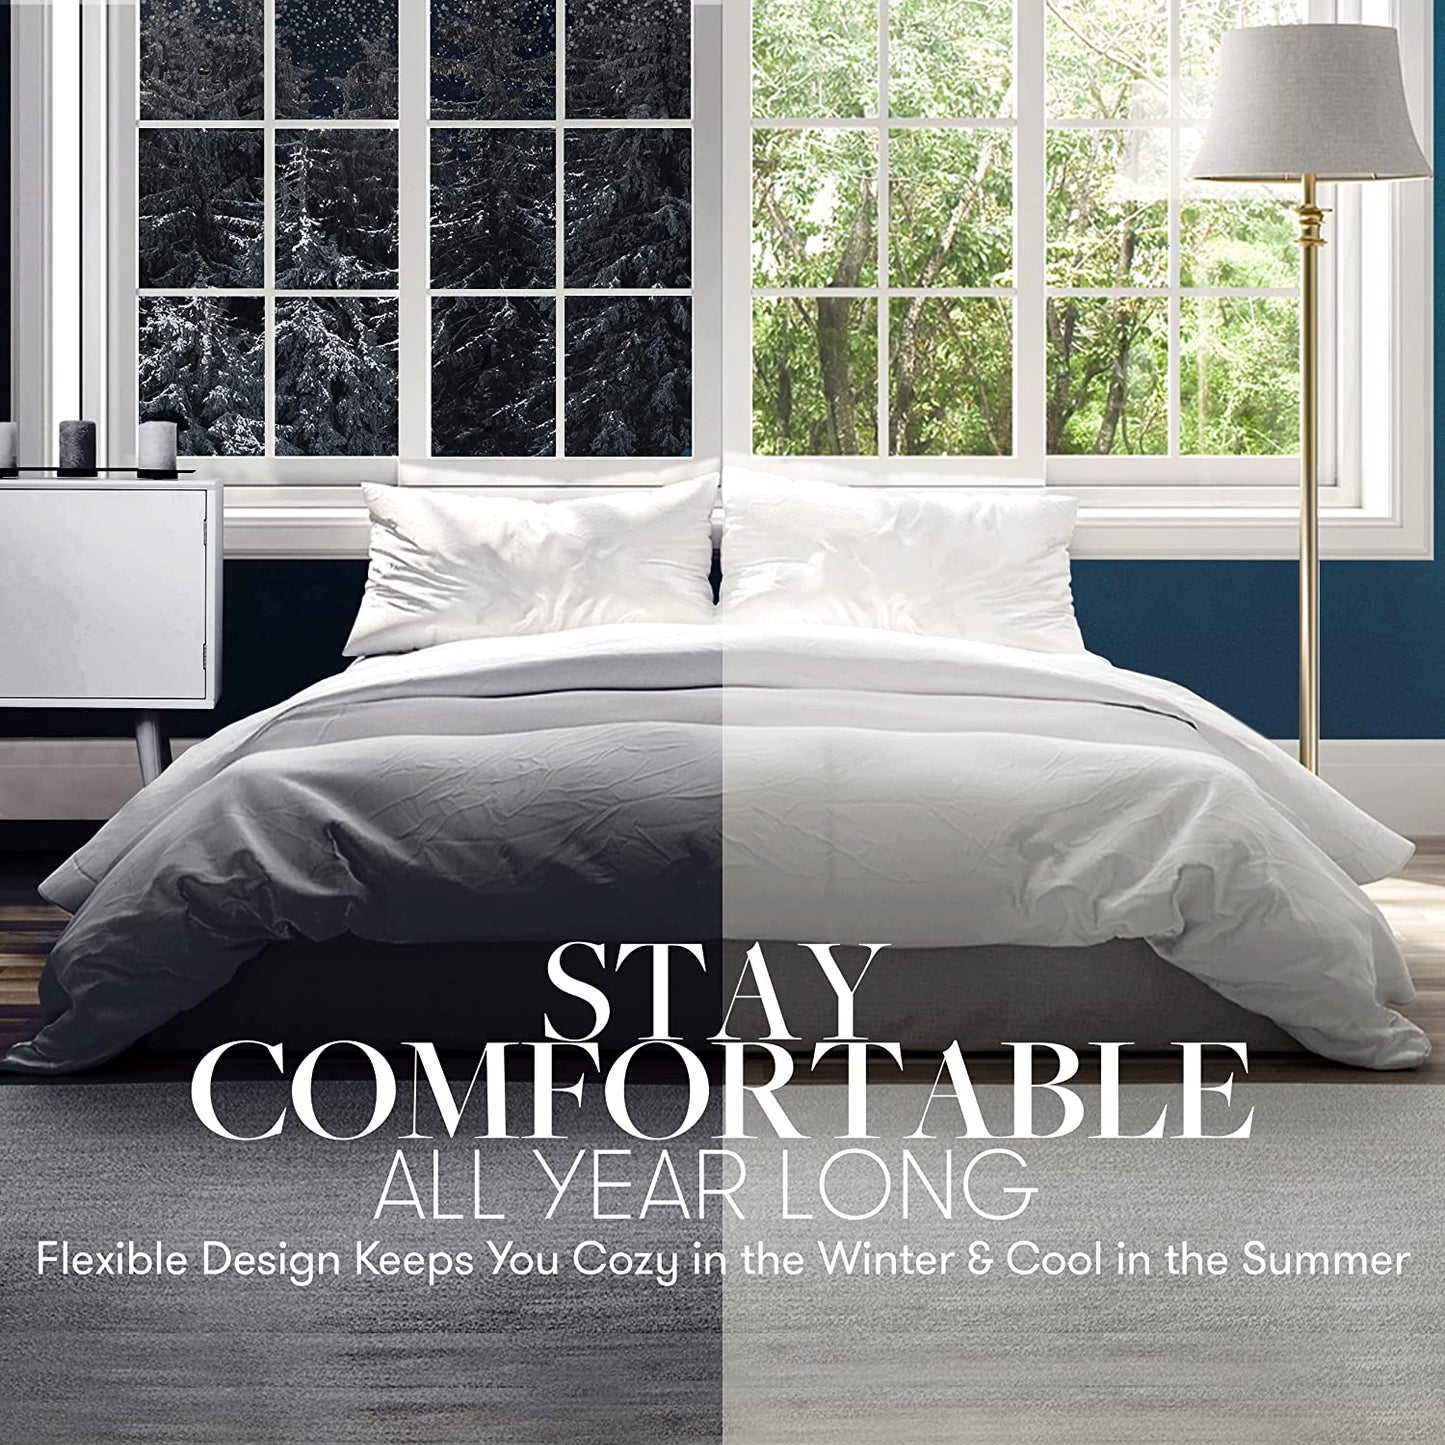 Twin/Twin XL Size Comforter - 1600 Series down Alternative Home Bedding & Duvet Insert - Black